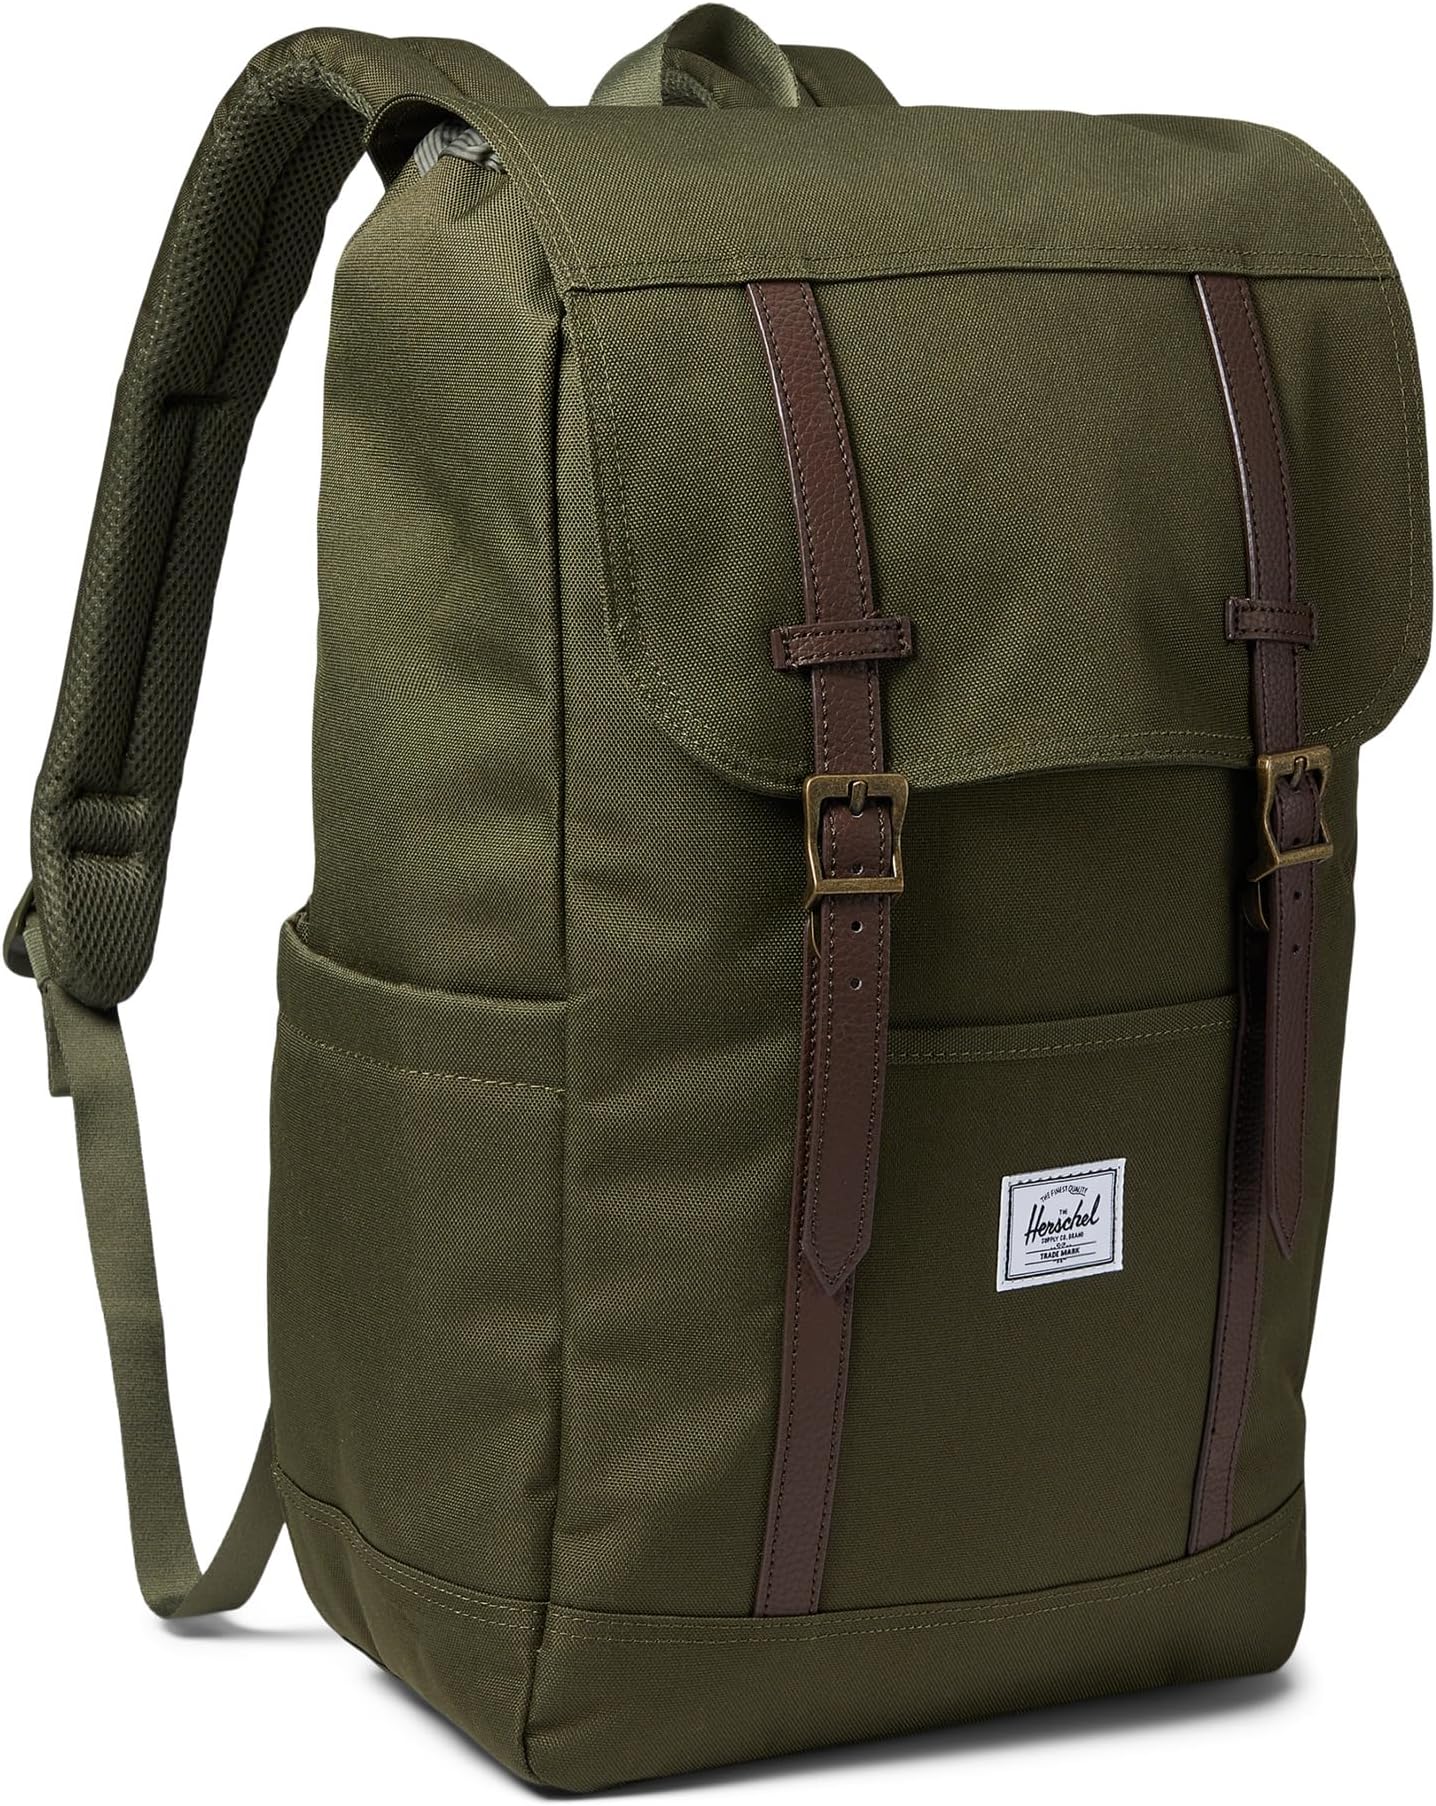 рюкзак retreat backpack herschel supply co цвет ivy green Рюкзак Retreat Backpack Herschel Supply Co., цвет Ivy Green